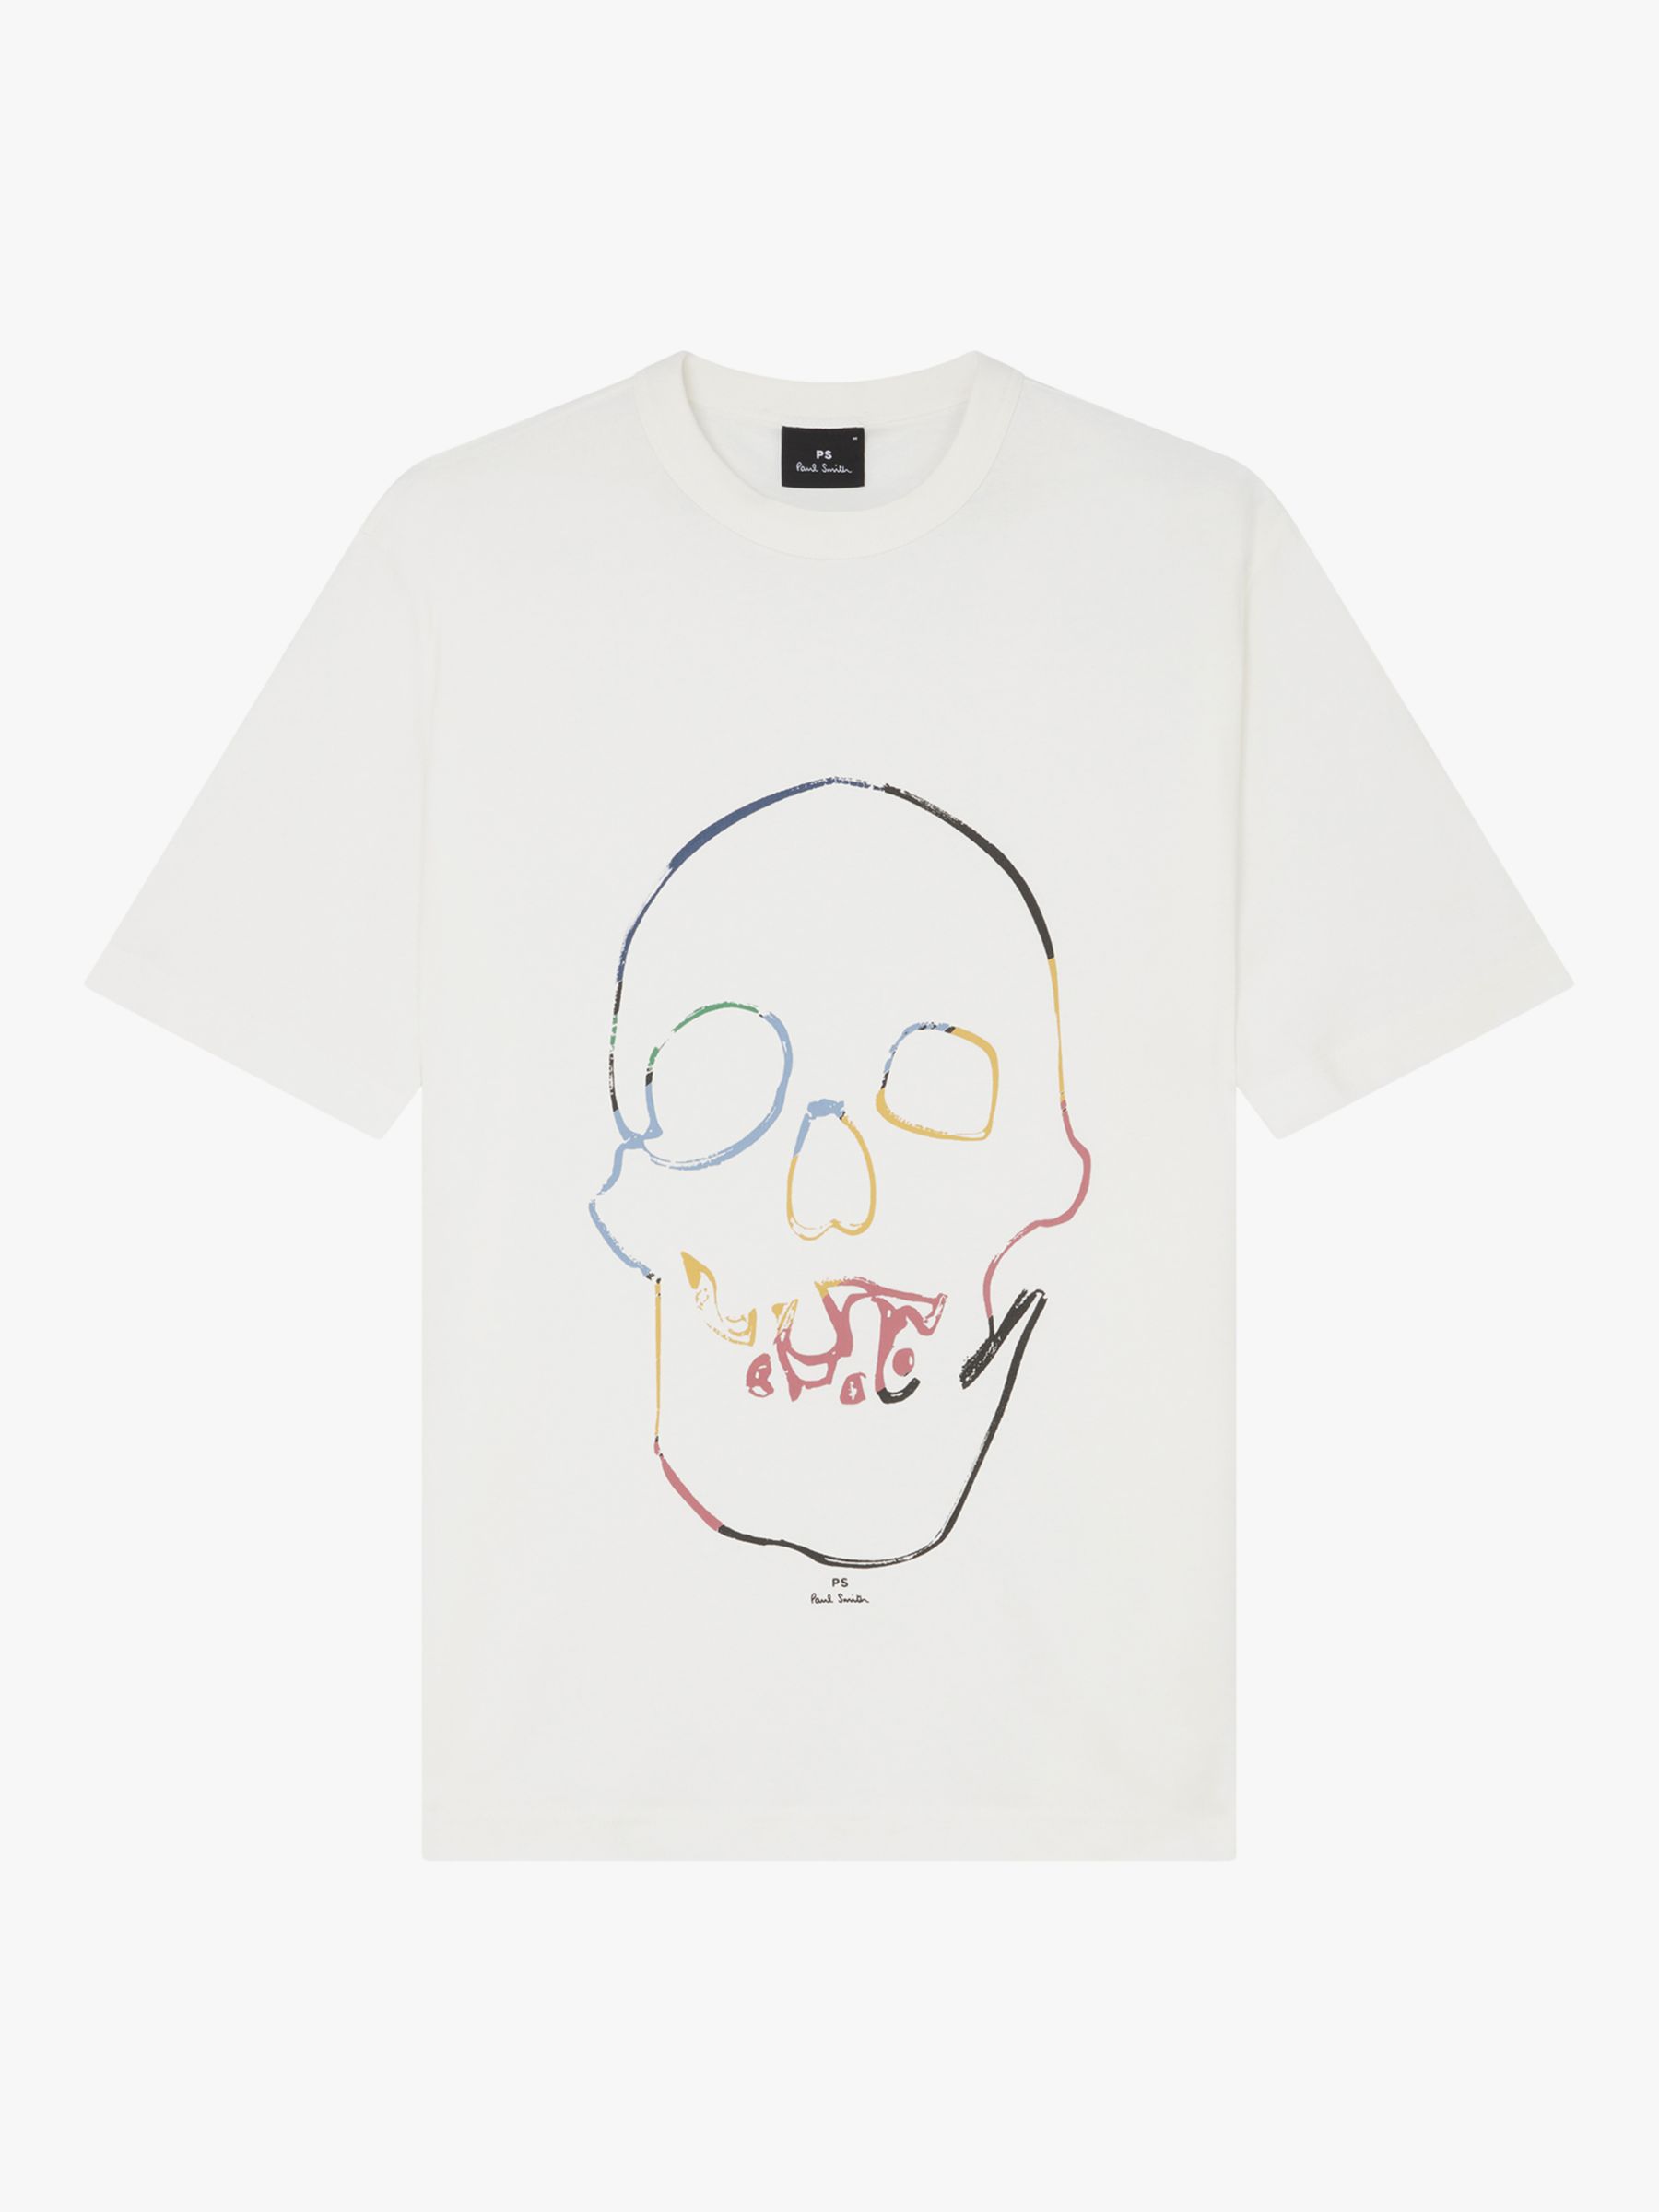 Paul Smith Skull Organic Cotton Short Sleeve T-Shirt, White, XL